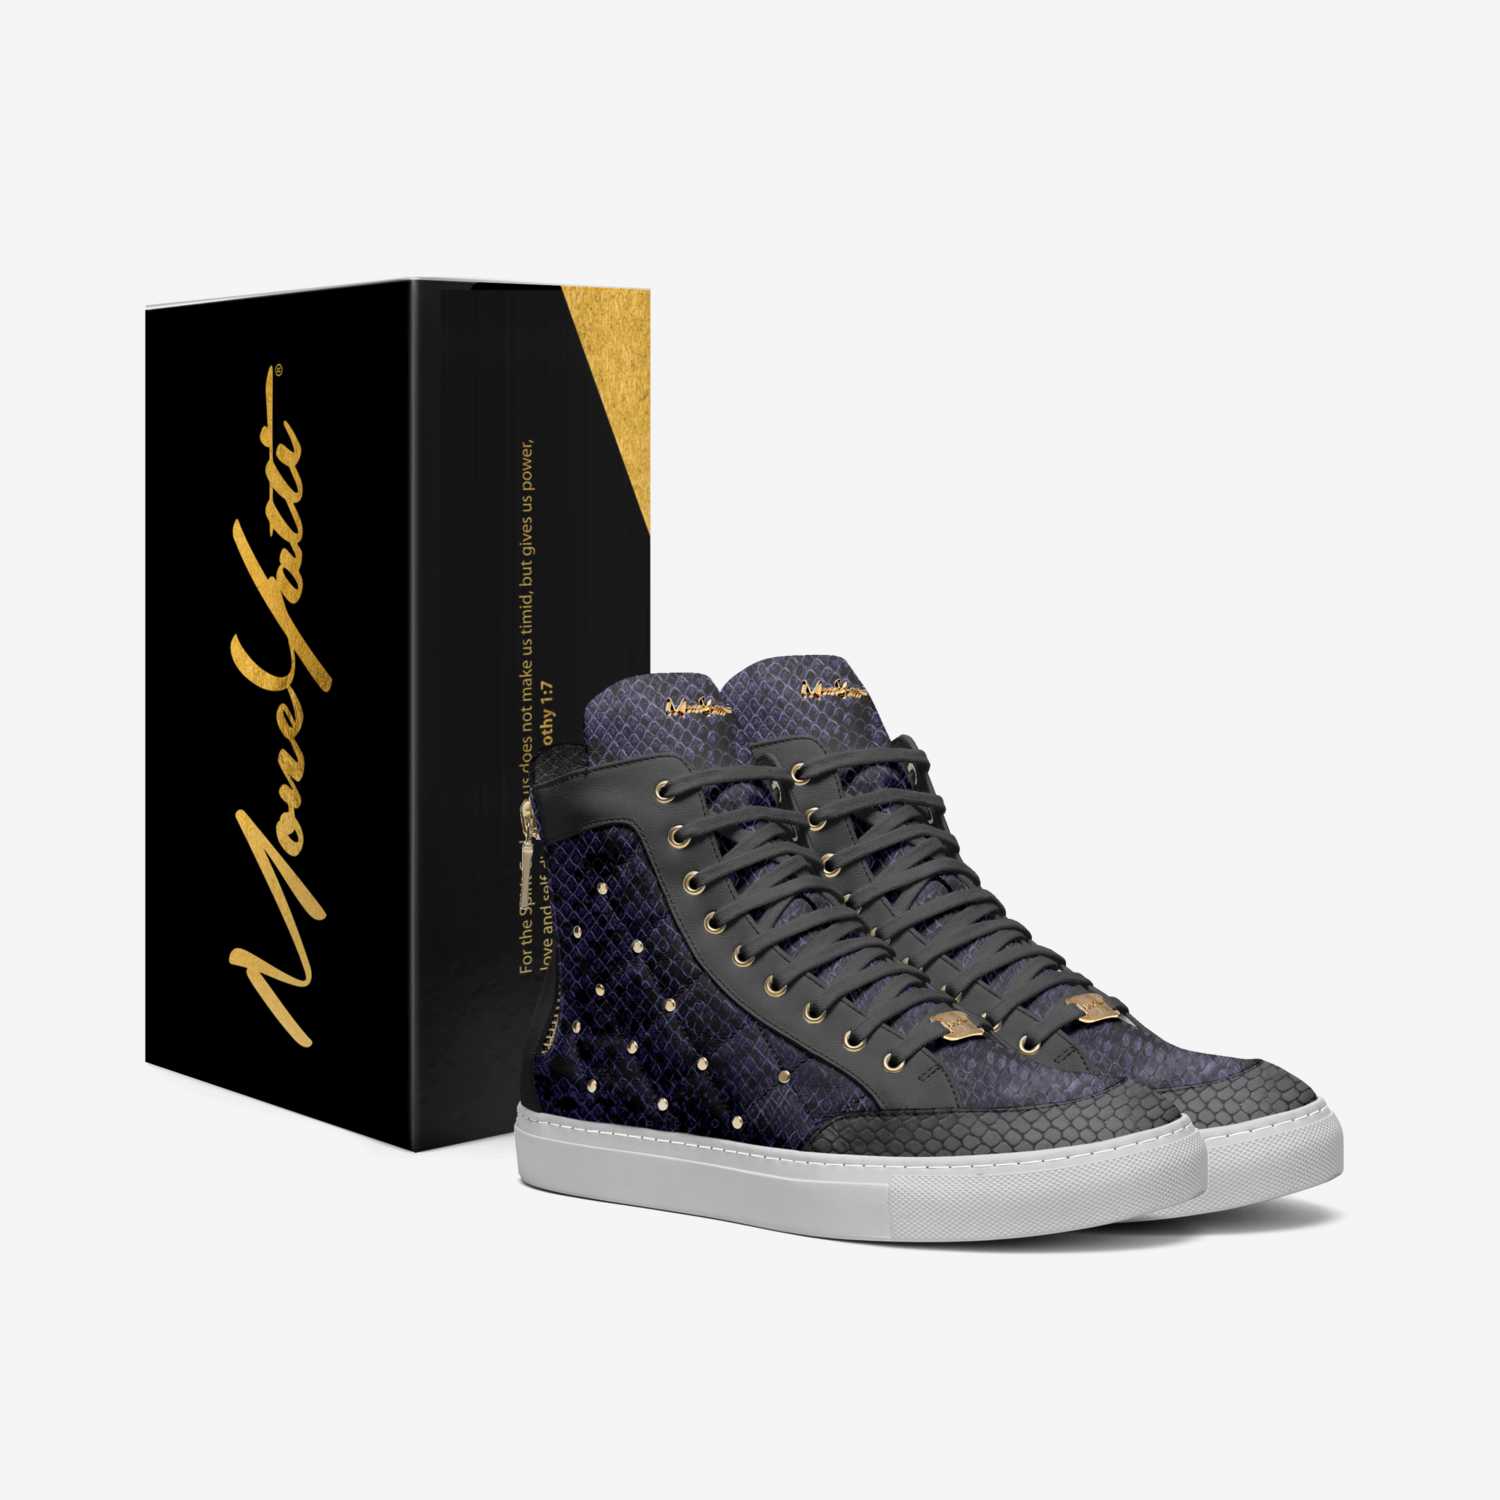 LTD 501 custom made in Italy shoes by Moneyatti Brand | Box view